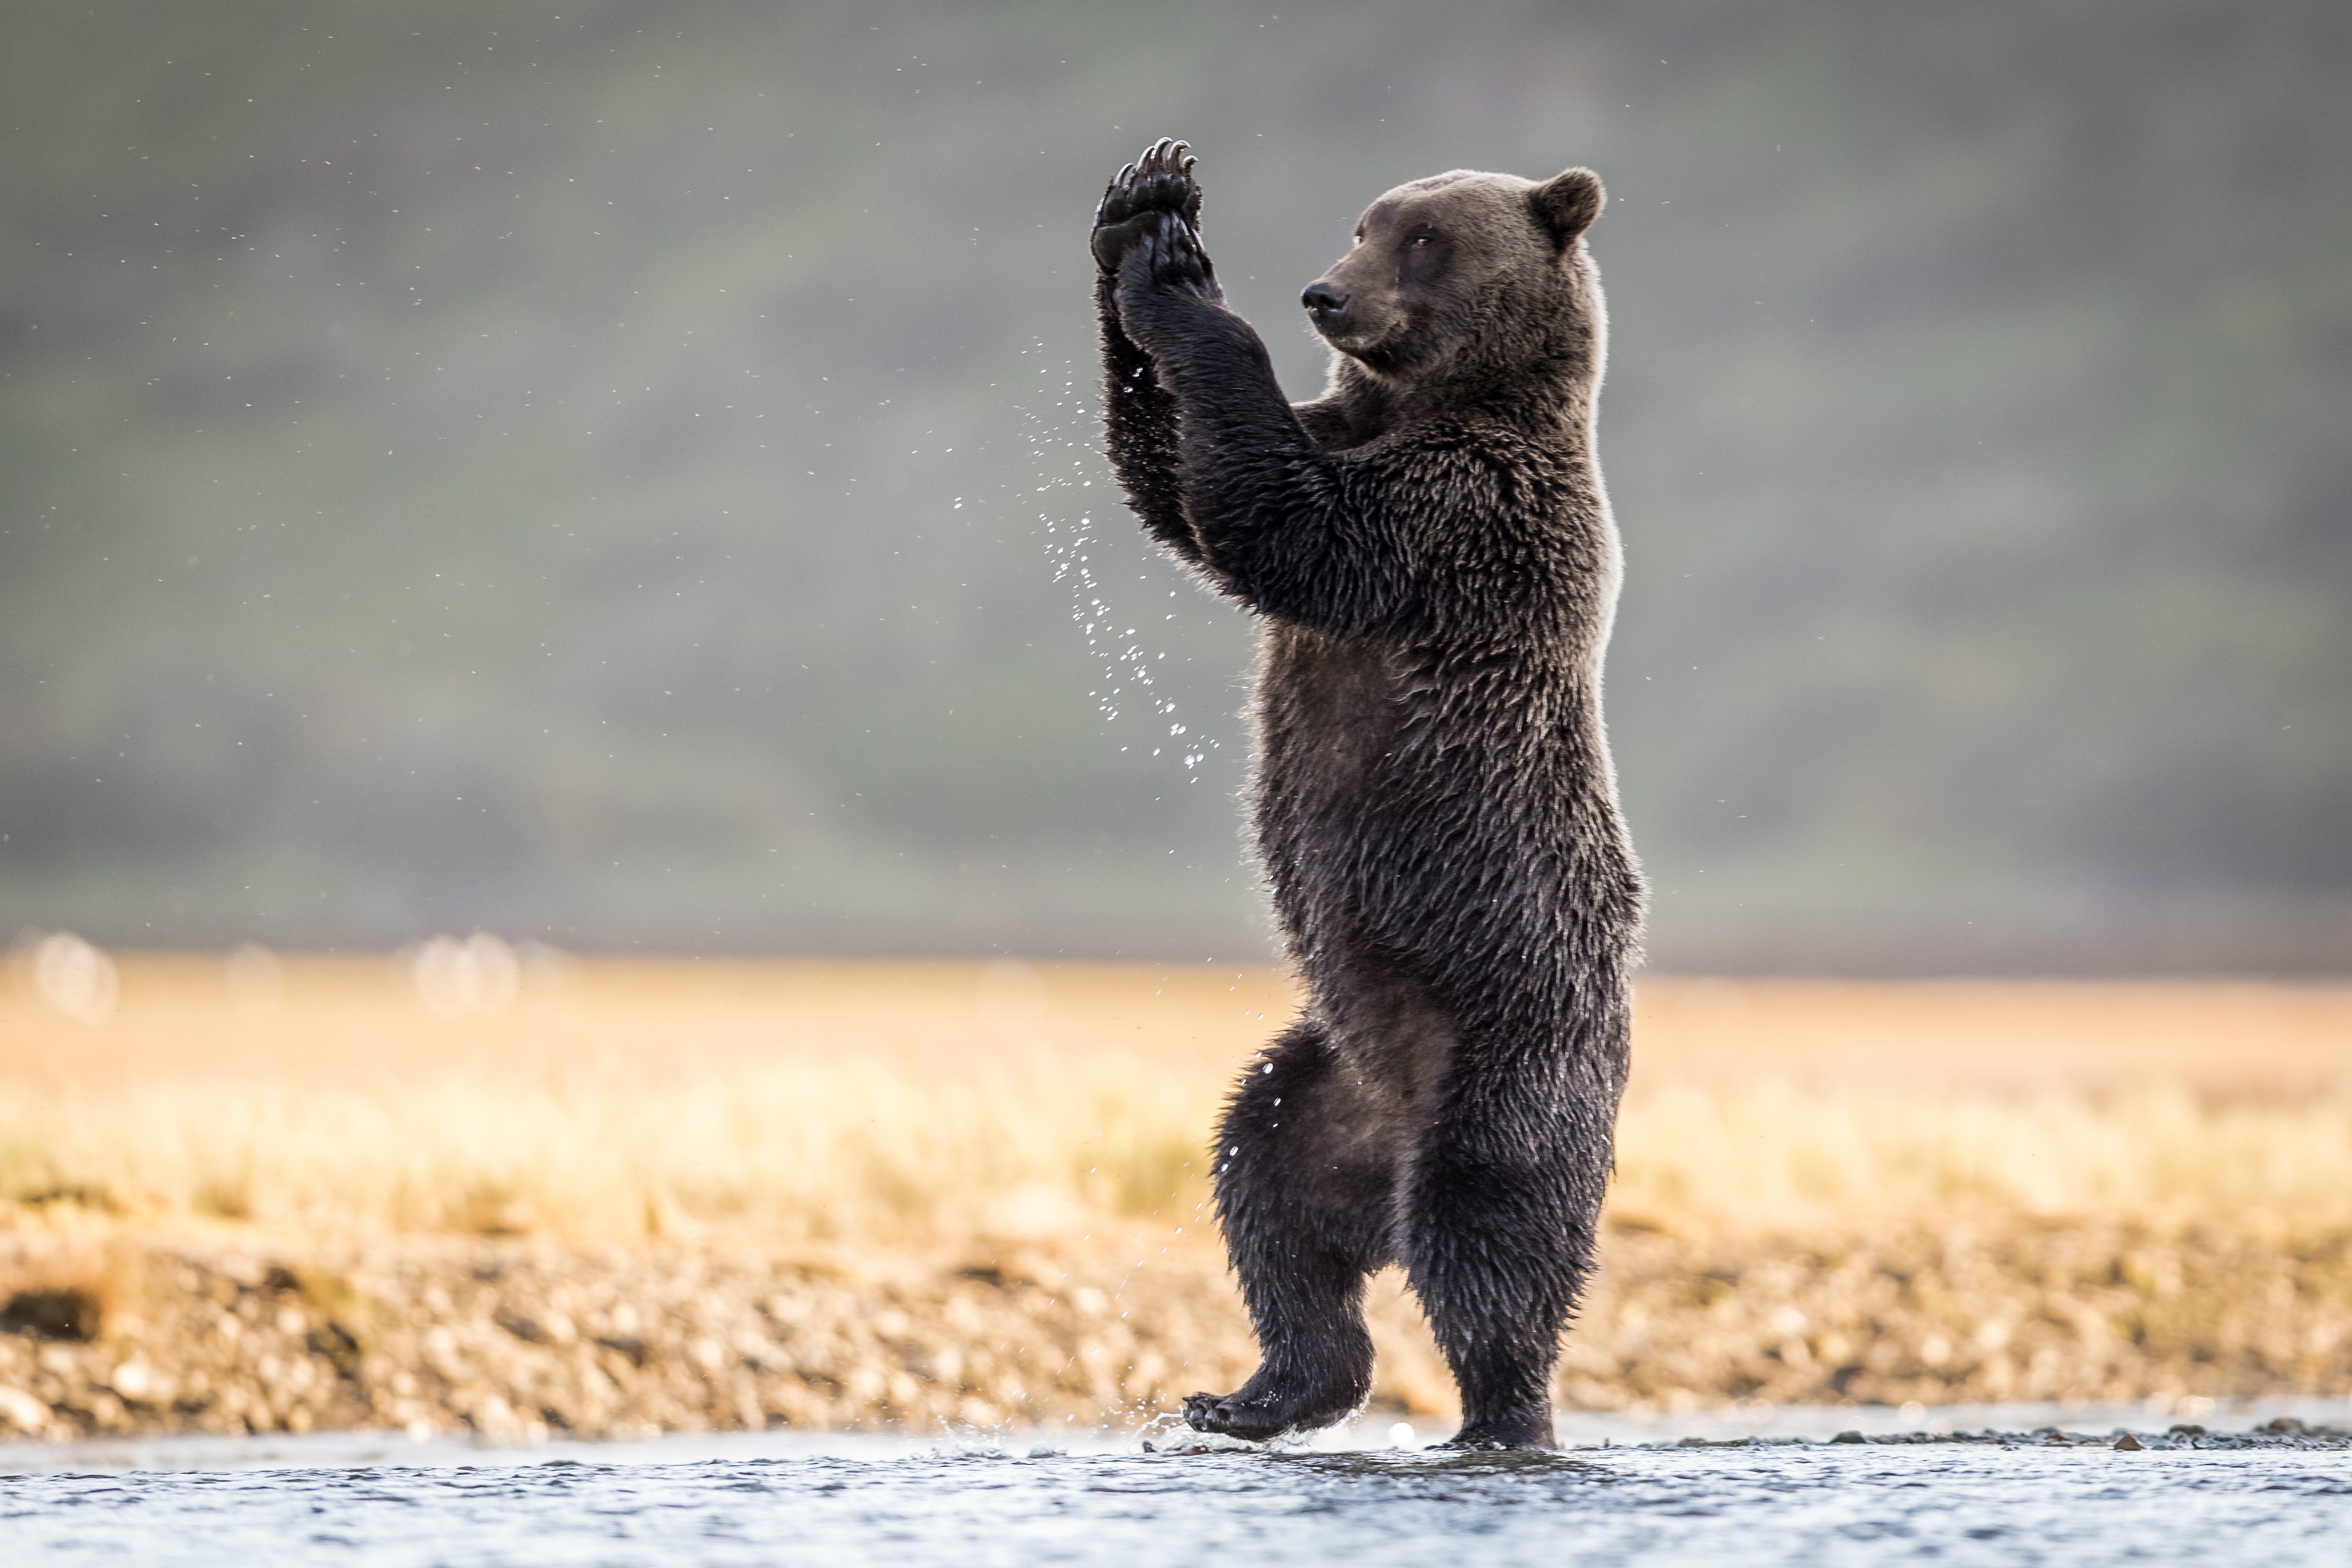 Bear dancing in water